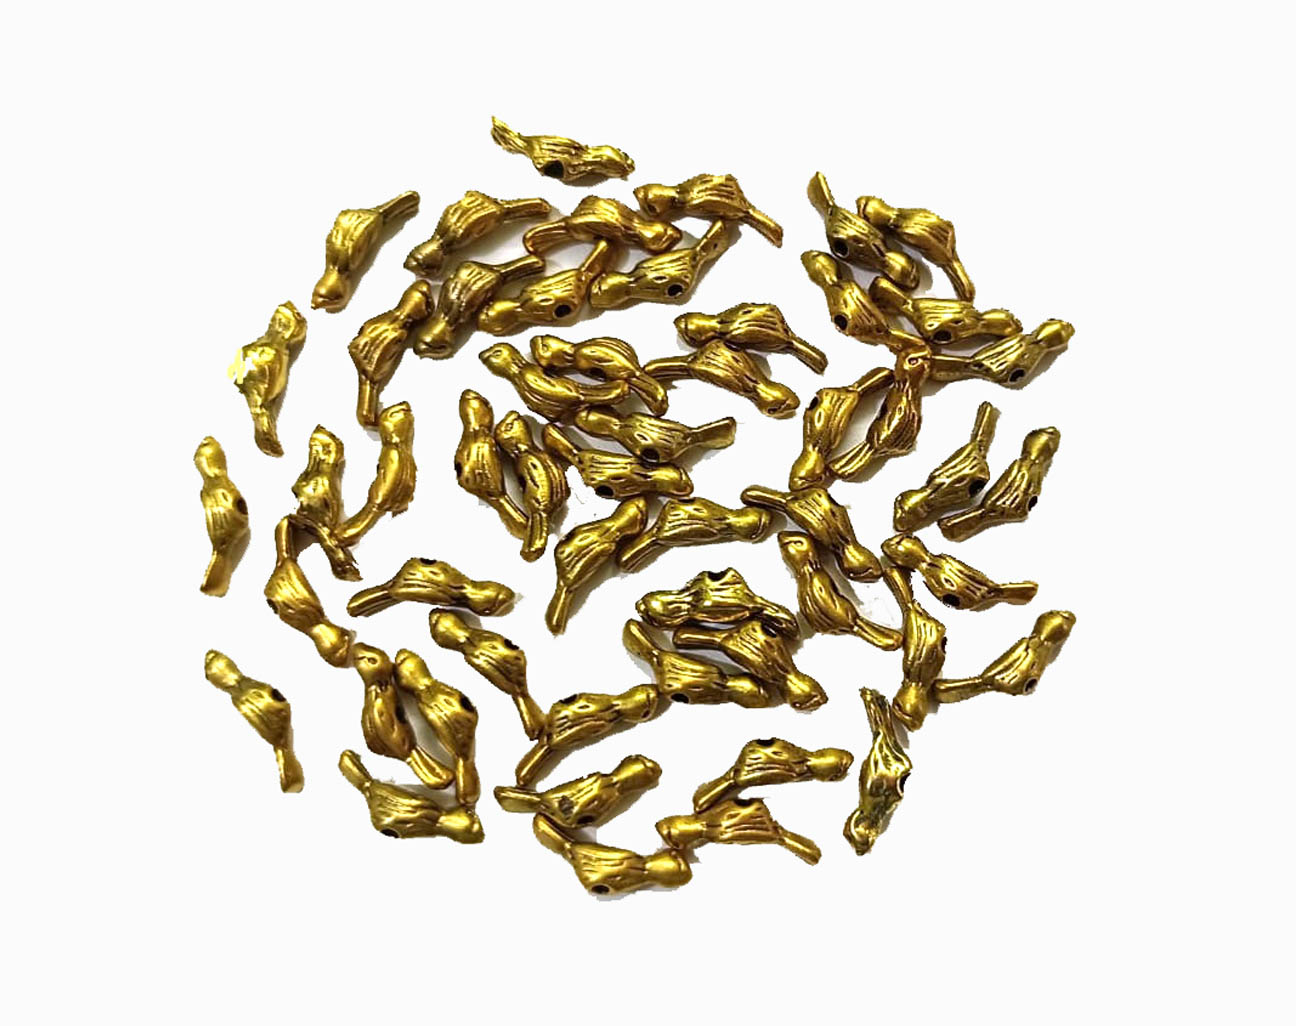 Antique Golden Spacer Beads